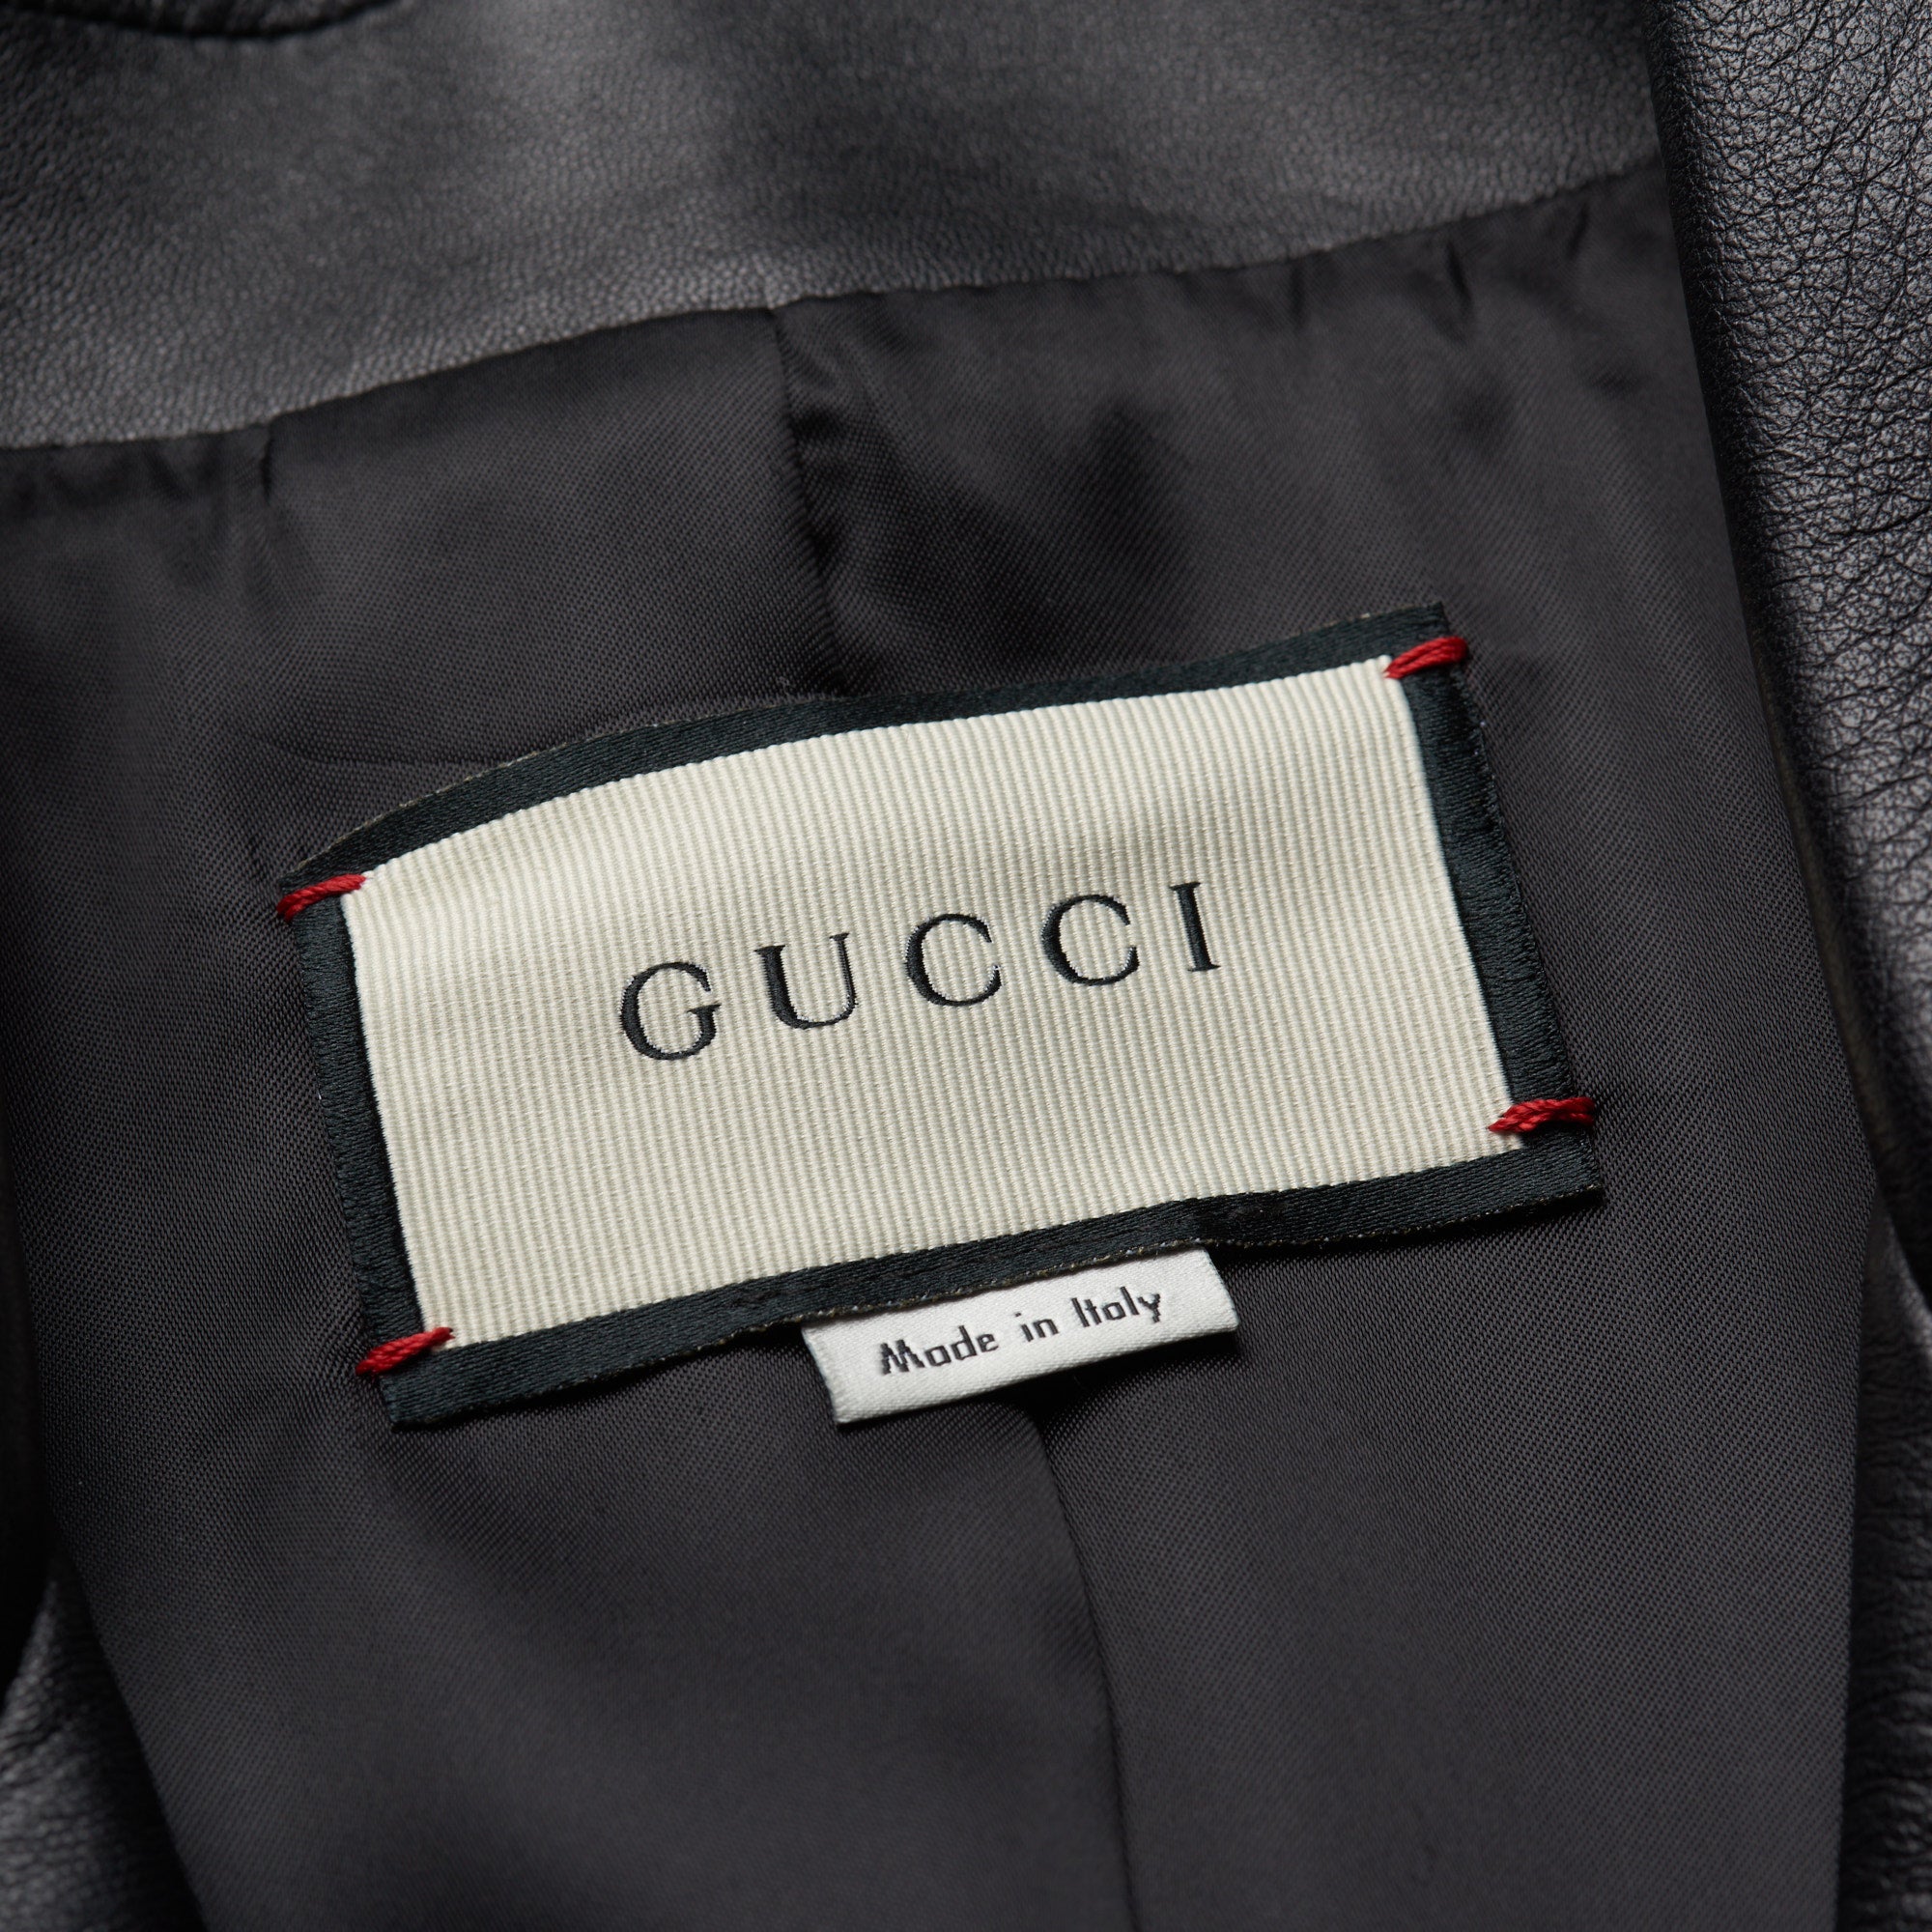 Gucci, Coat, Italian